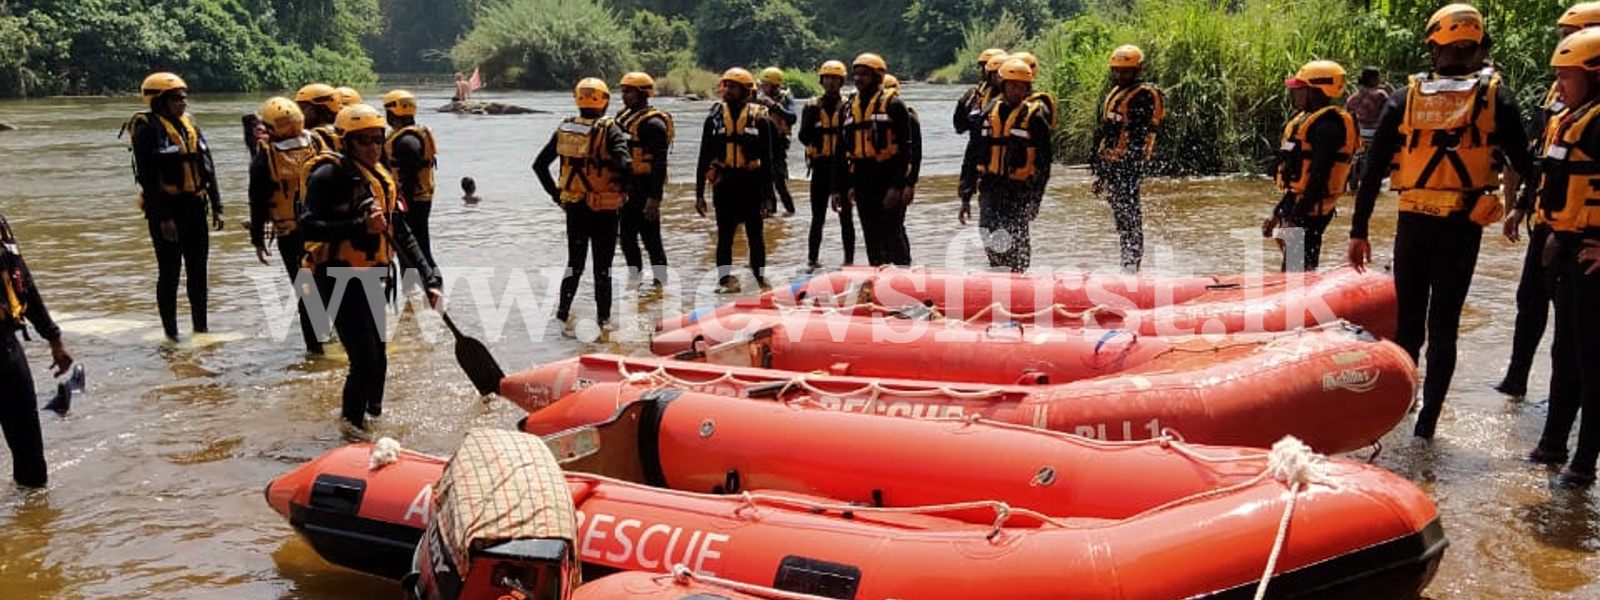 Community-level Swift Water Rescue training begins